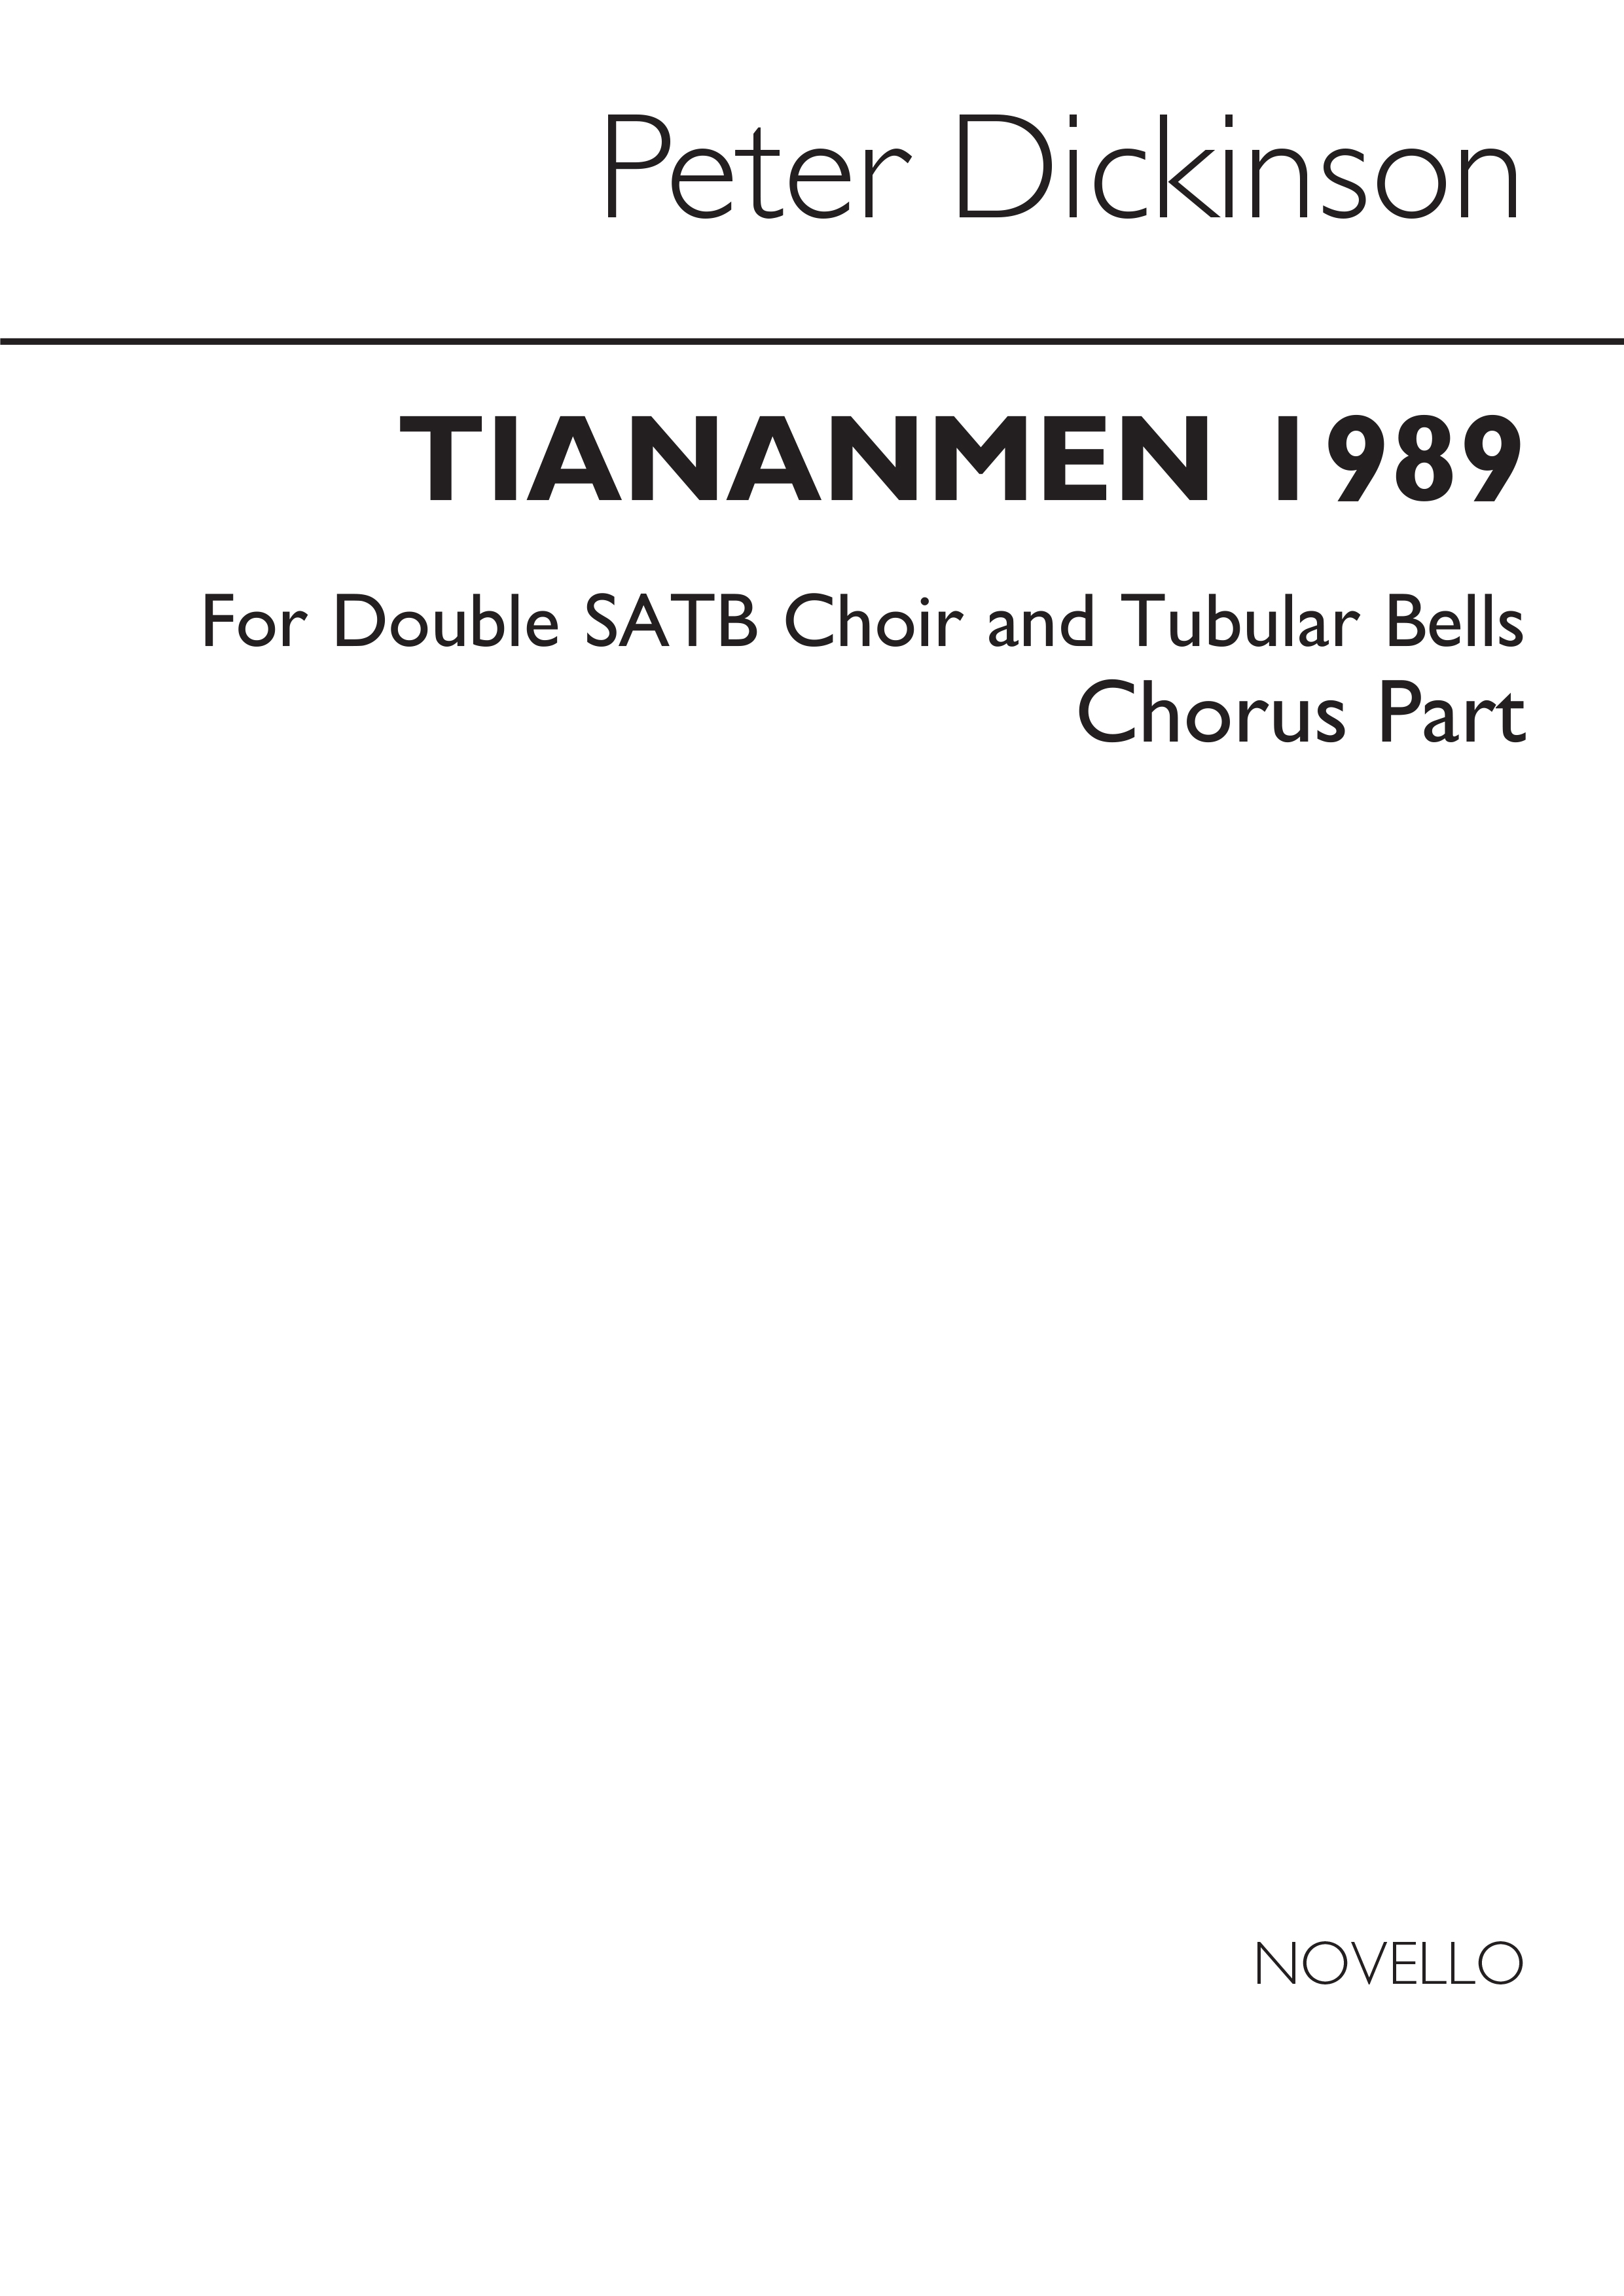 Dickinson, P Tiananmen 1989 Chorus Part